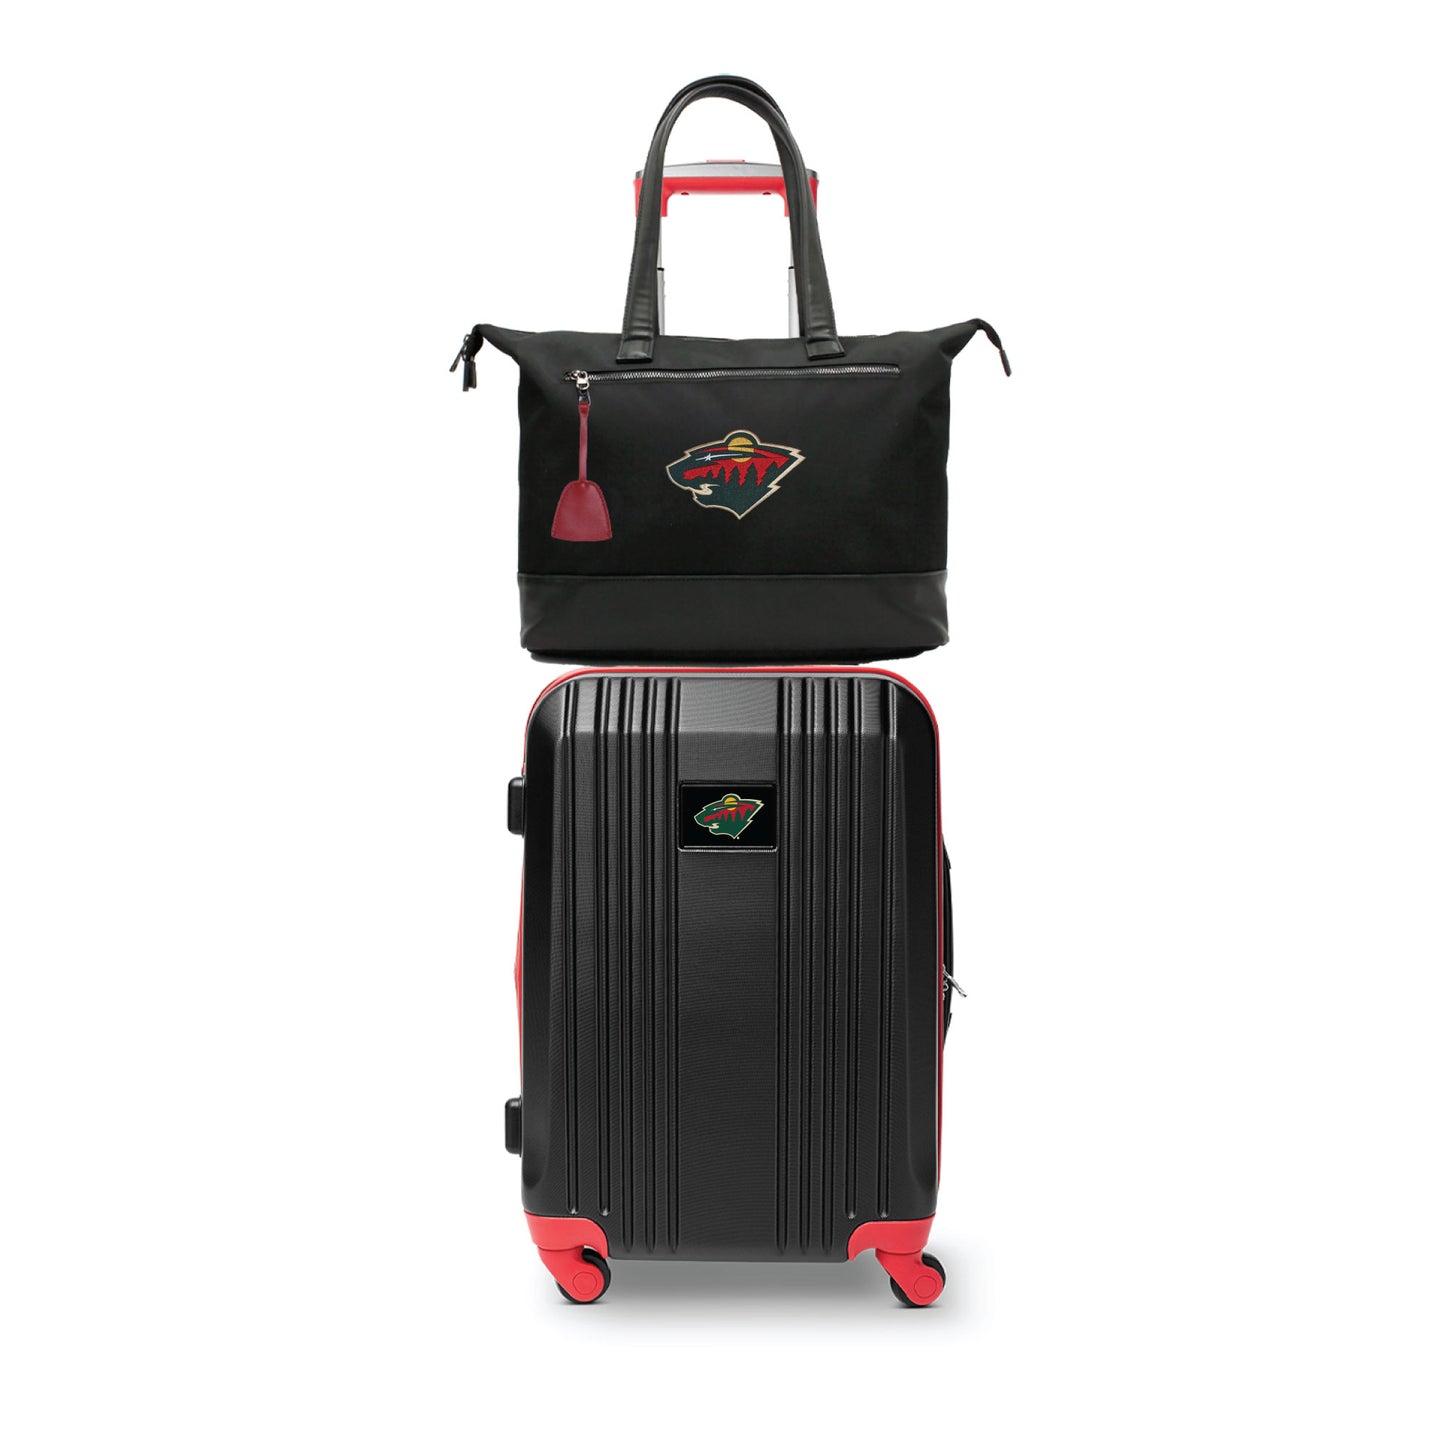 Minnesota Wild Premium Laptop Tote Bag and Luggage Set